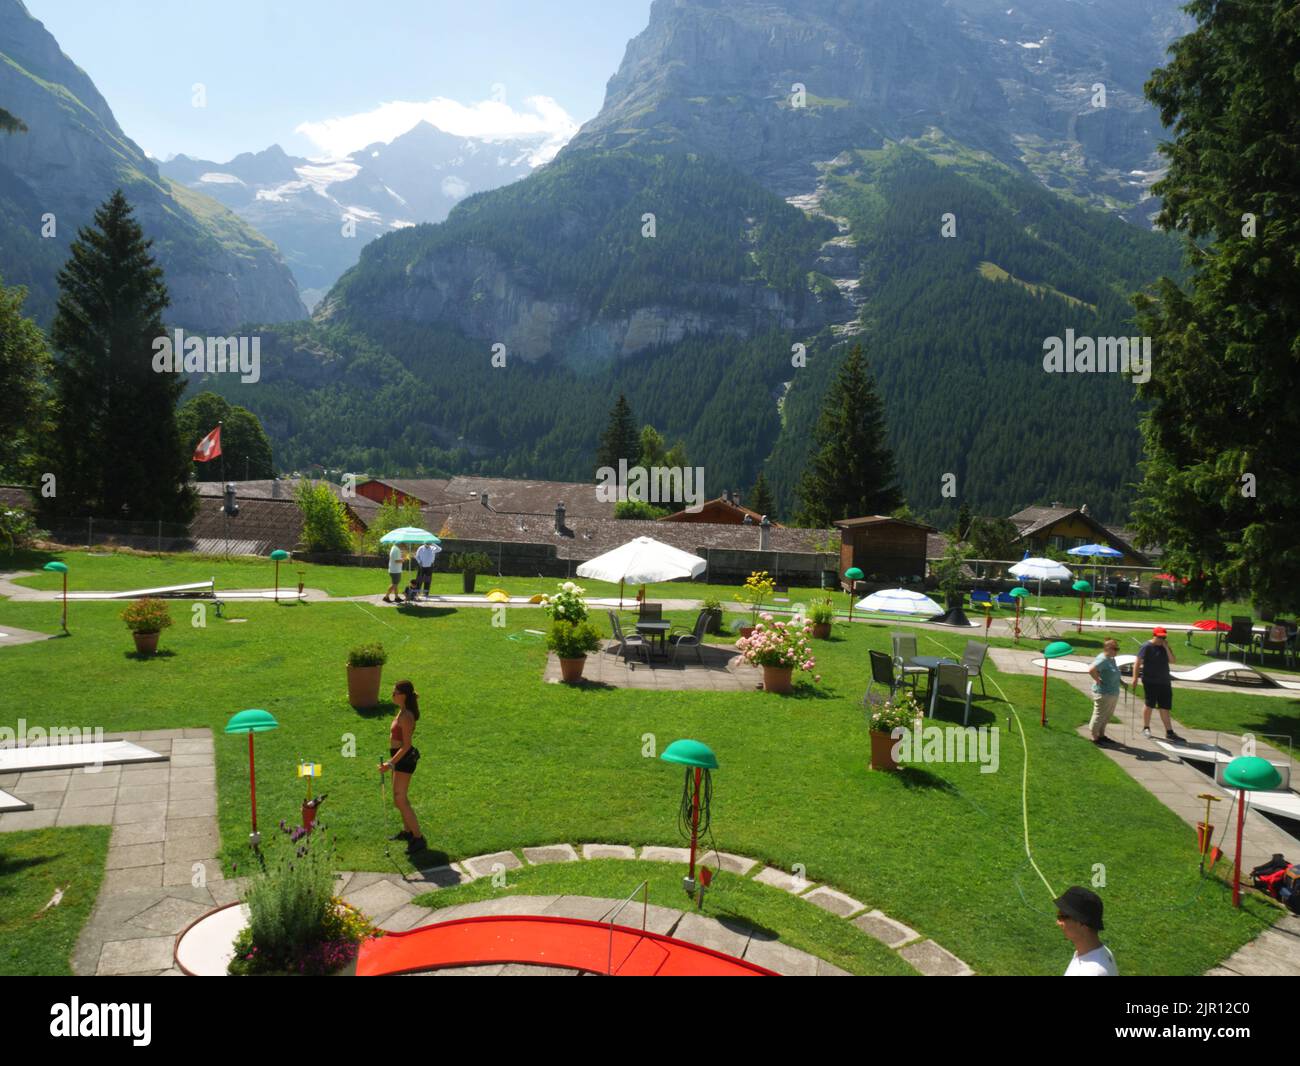 Minigolf, Grindelwald, Berner Oberland, Schweiz Stockfotografie - Alamy